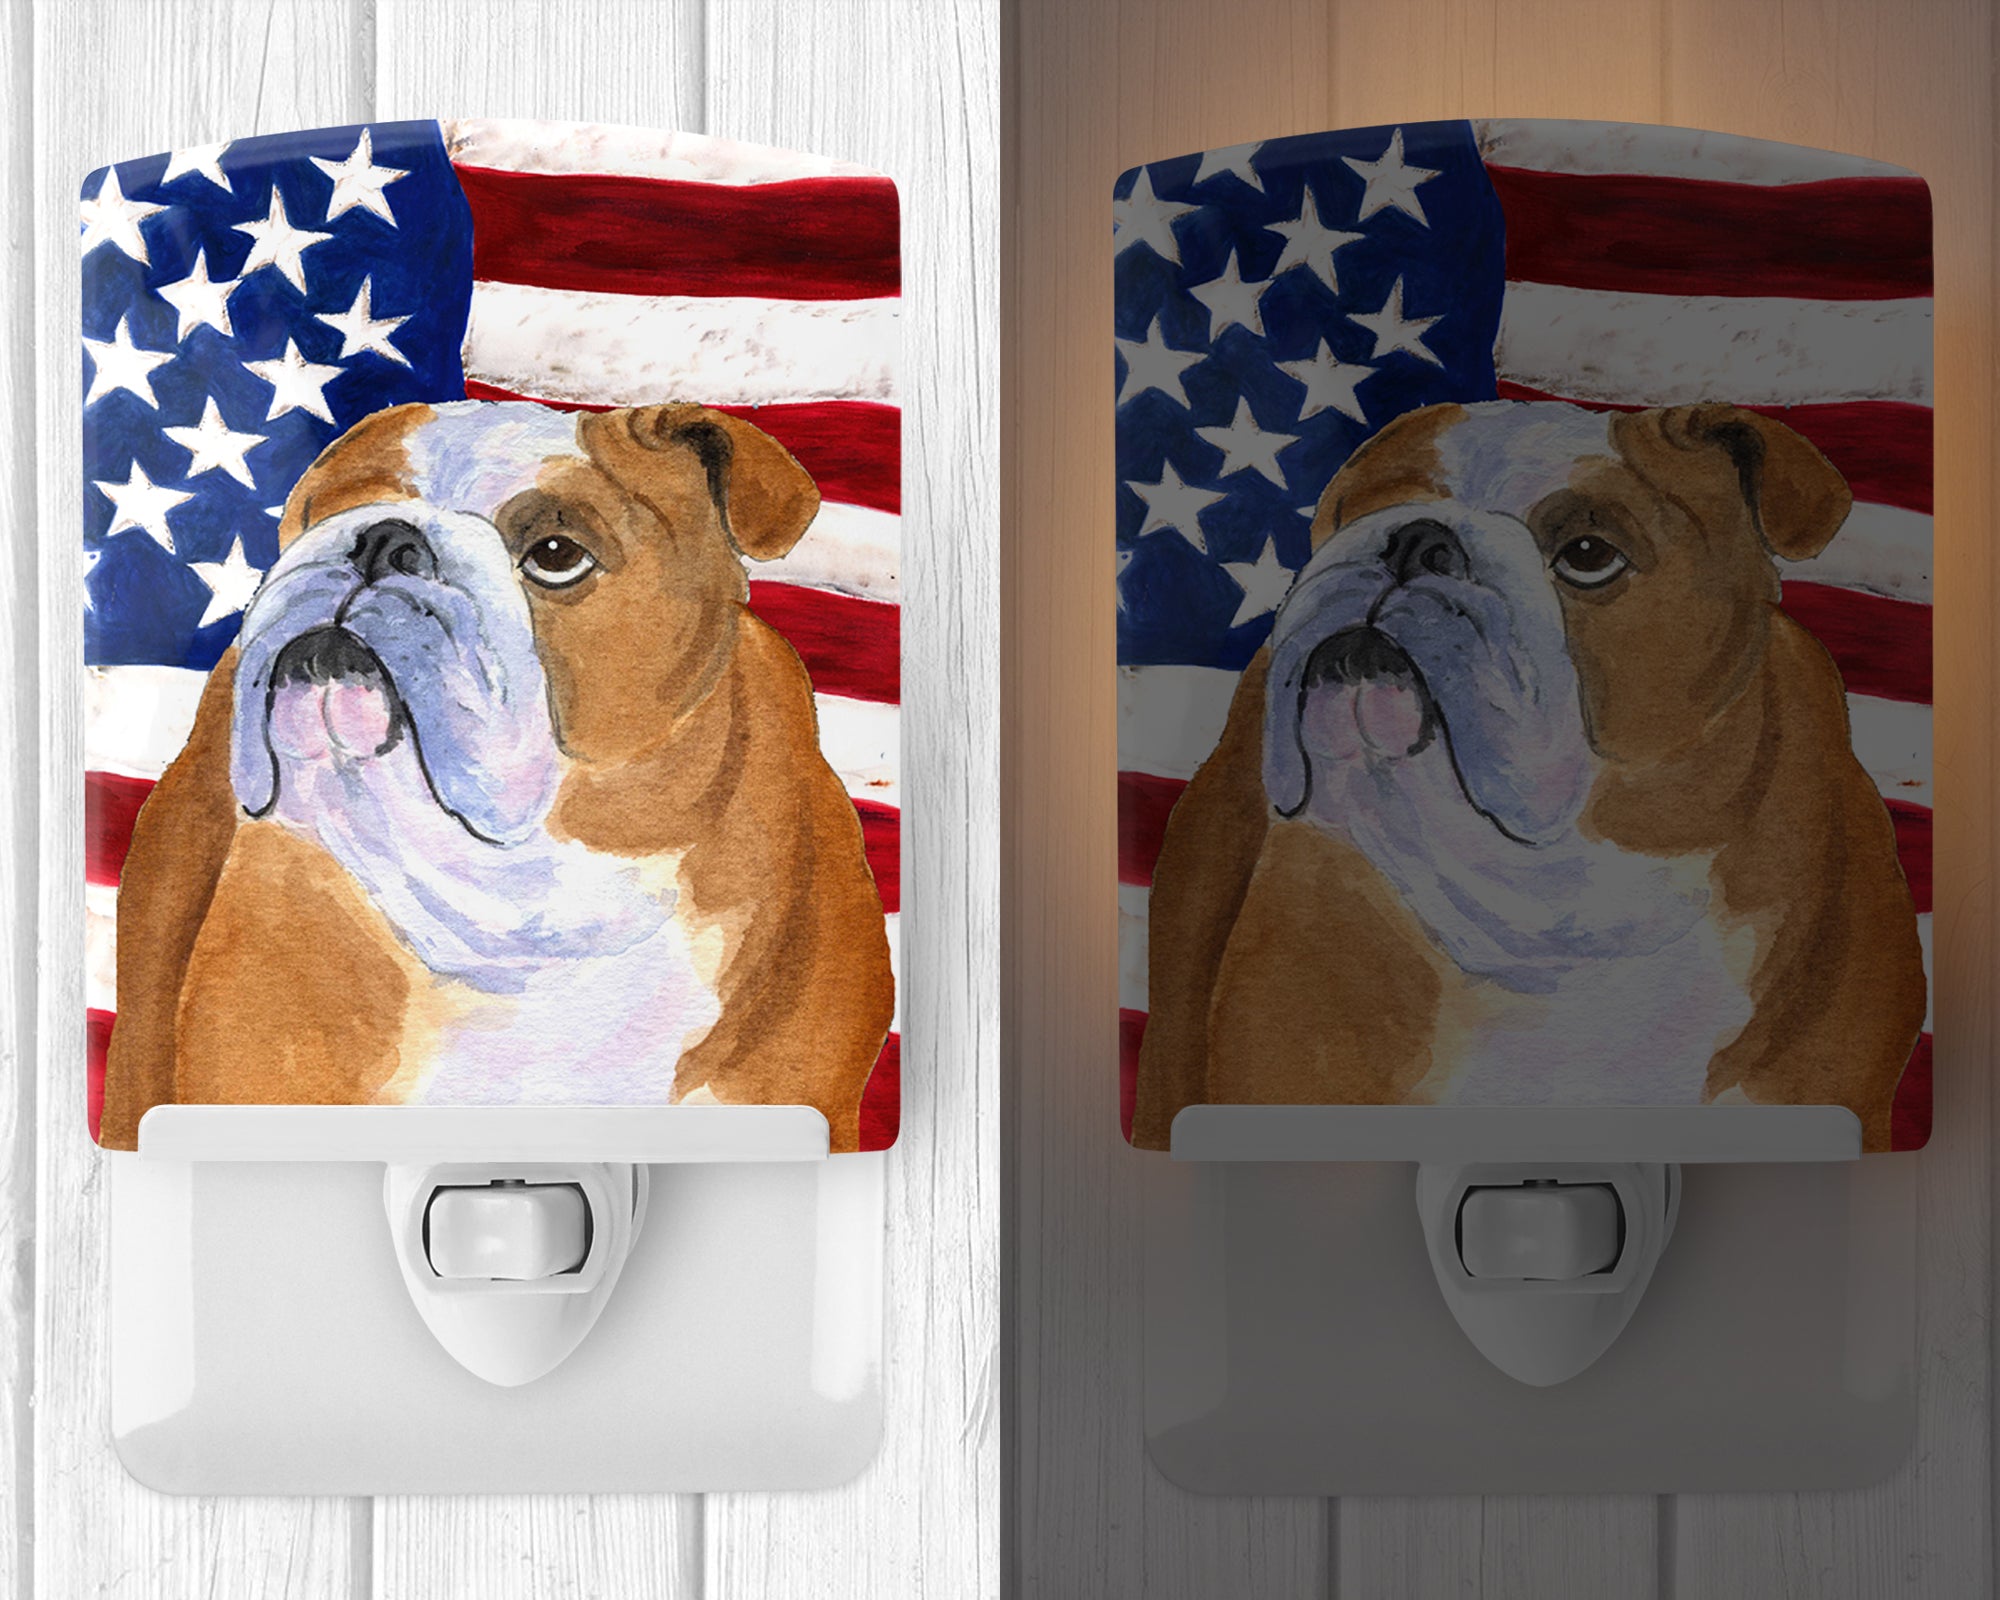 USA American Flag with Bulldog English Ceramic Night Light SS4017CNL - the-store.com